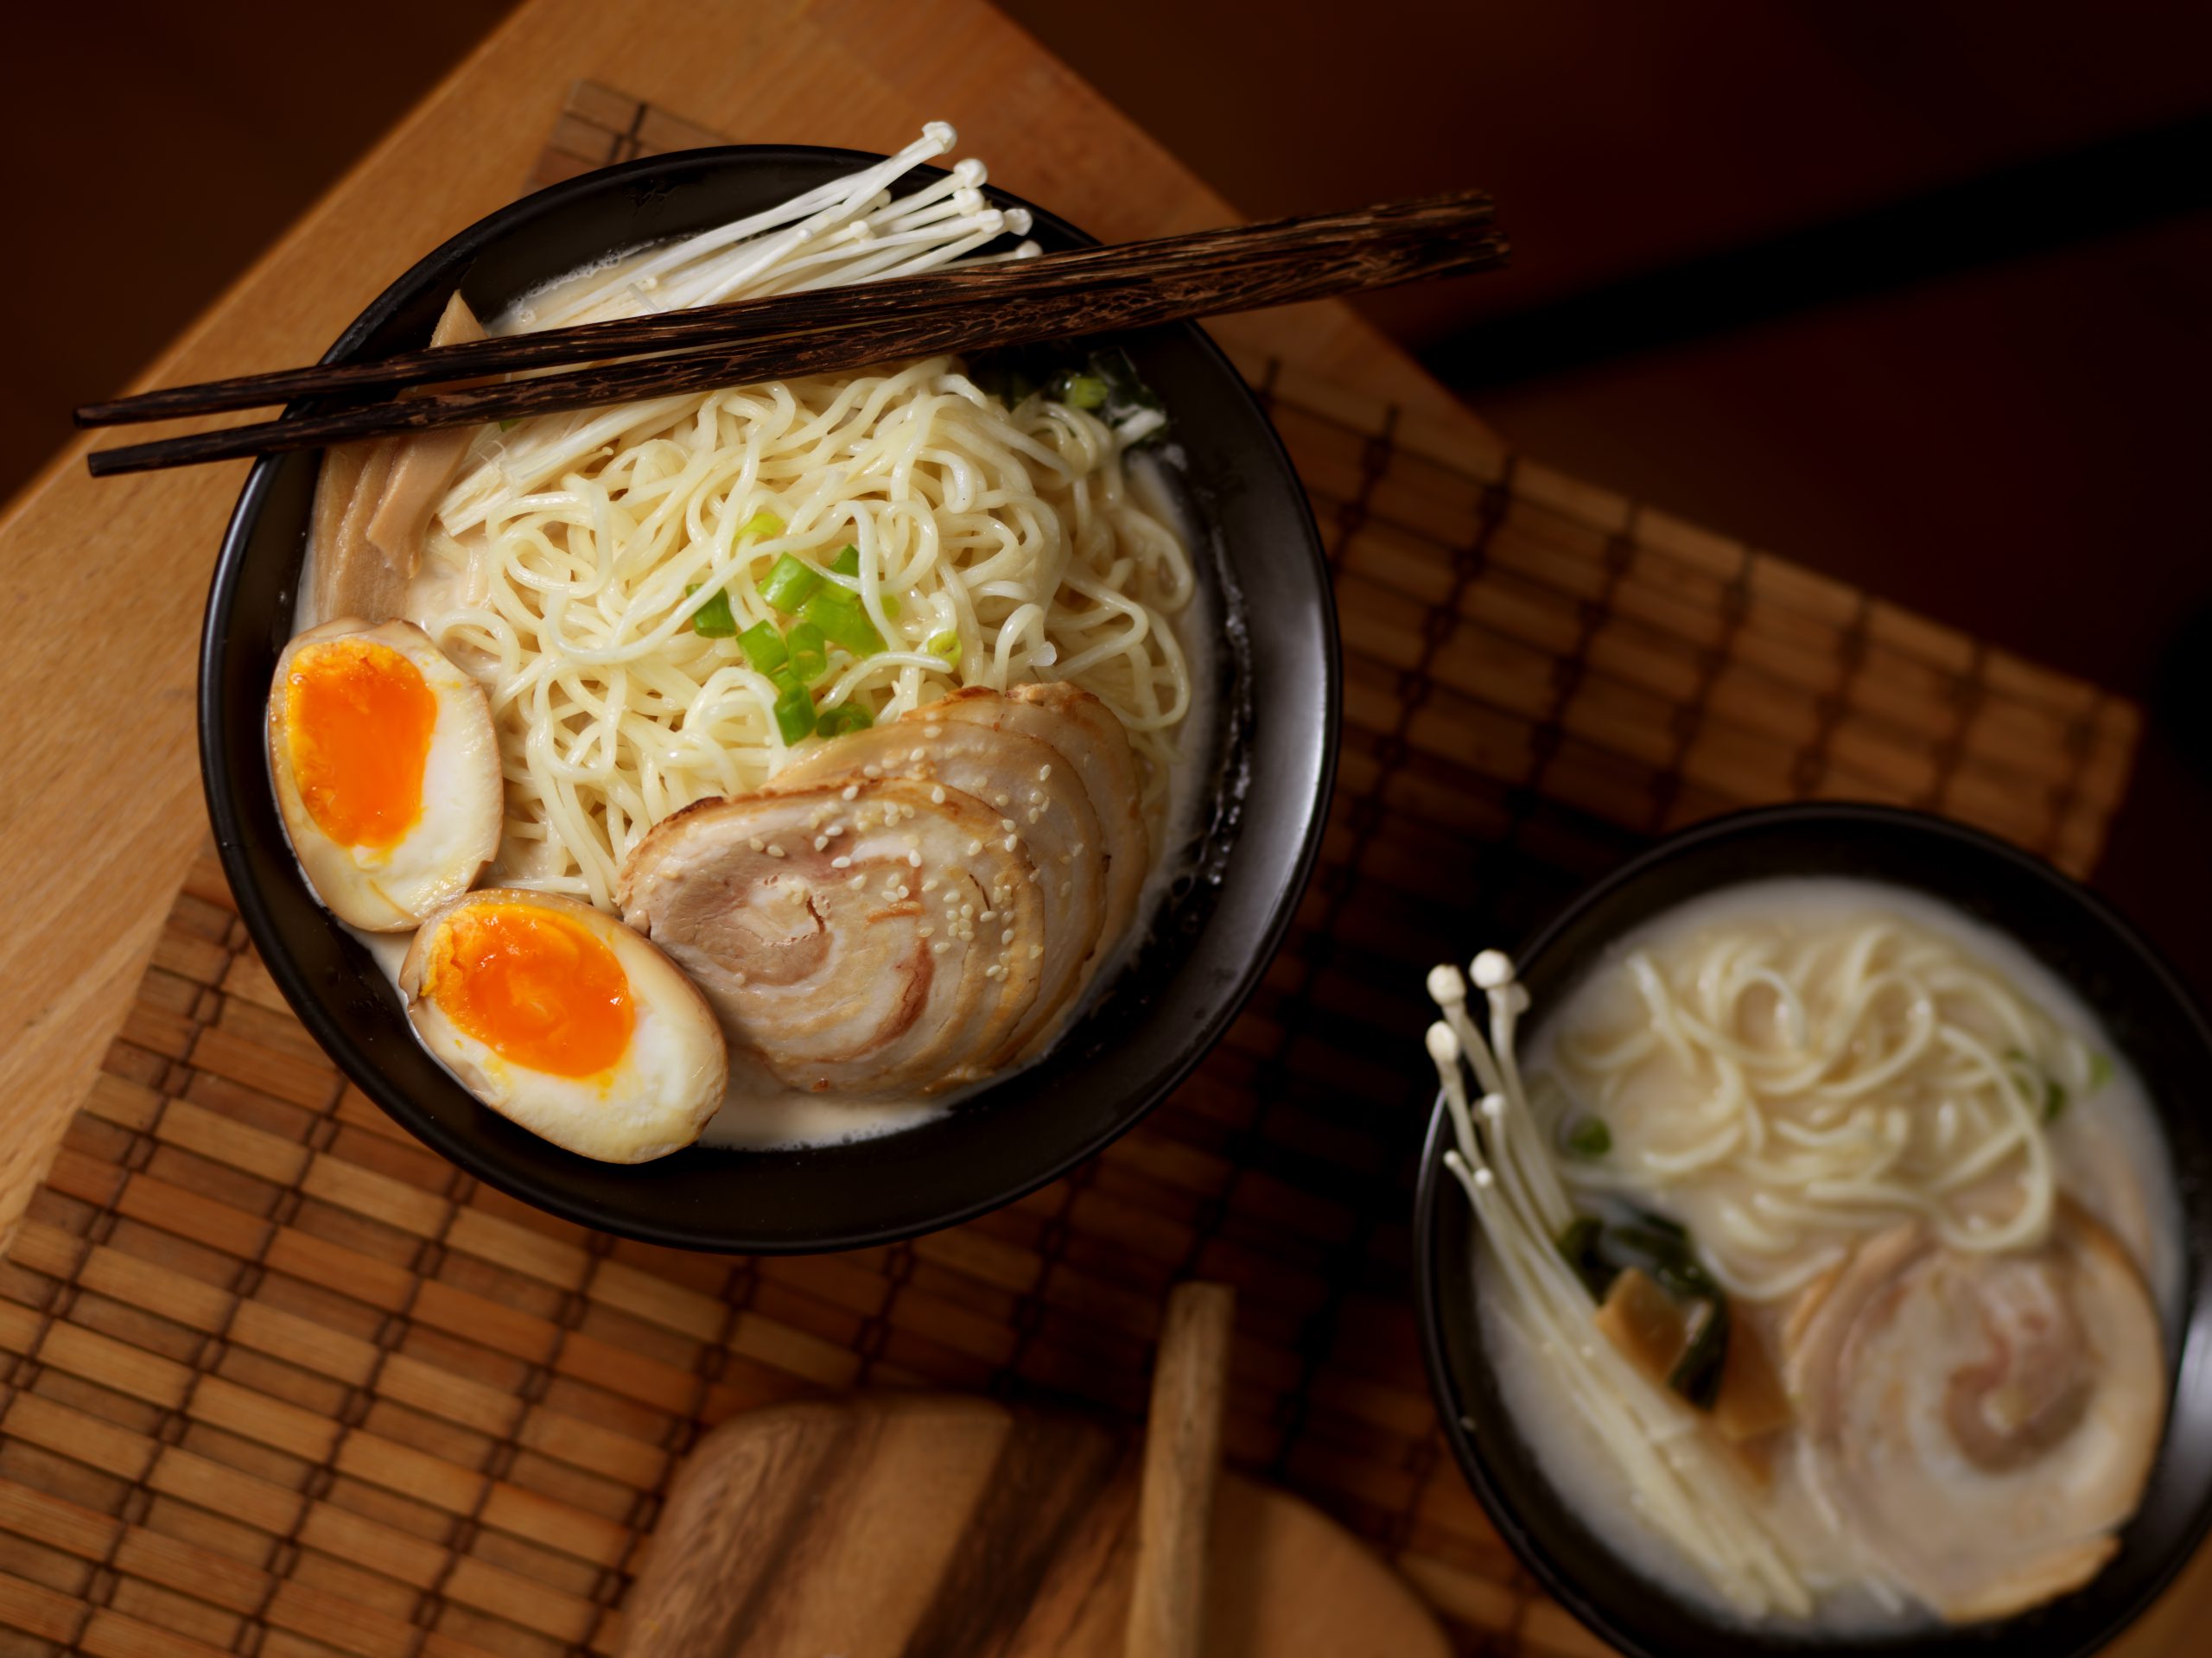 Tonkotsu ramen with pork bone based soup, traditional Japan noodle